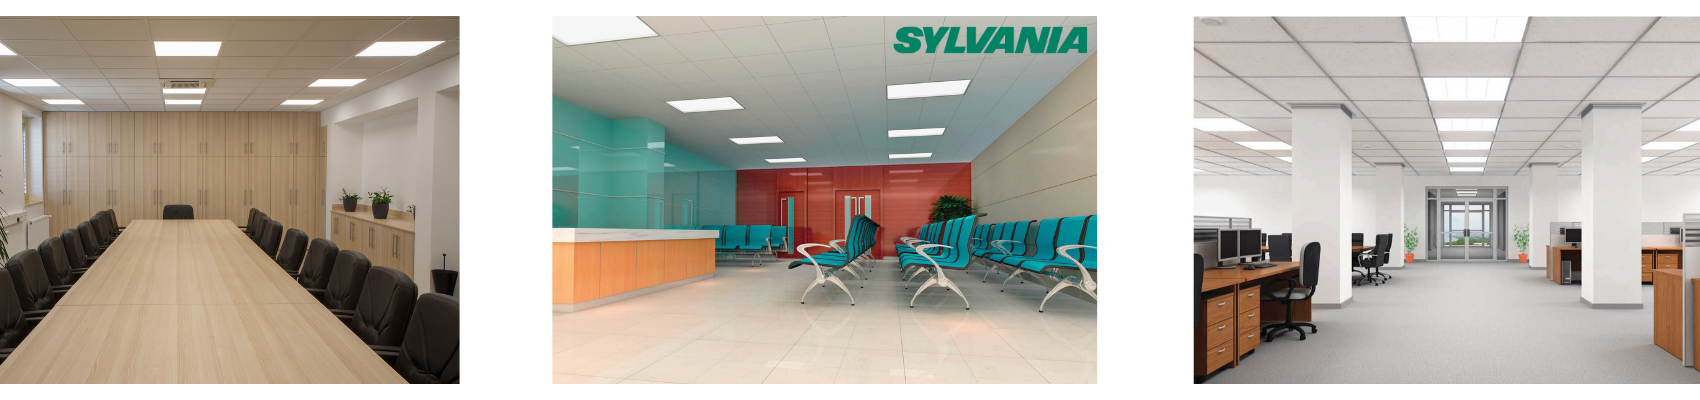 Sylvania LED panel